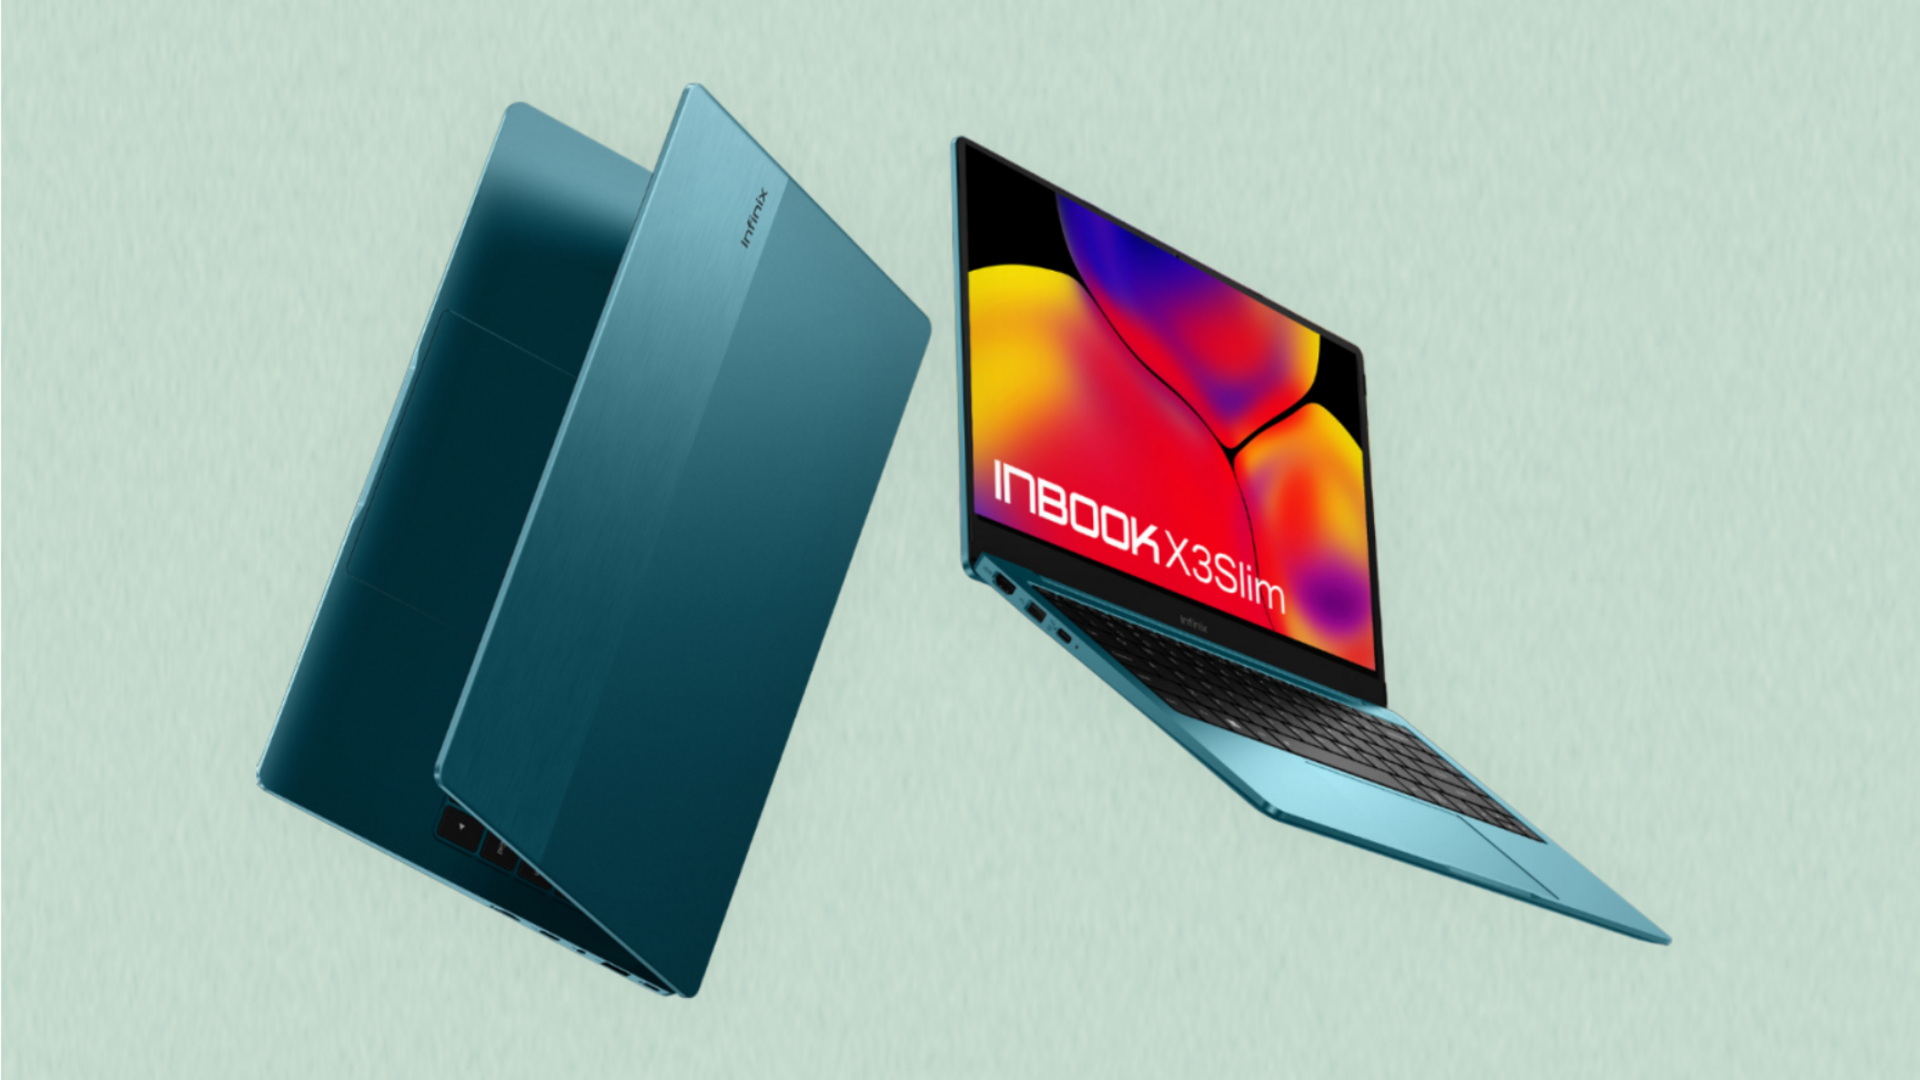 Infinix unveils INBook X3 Slim laptop models in India